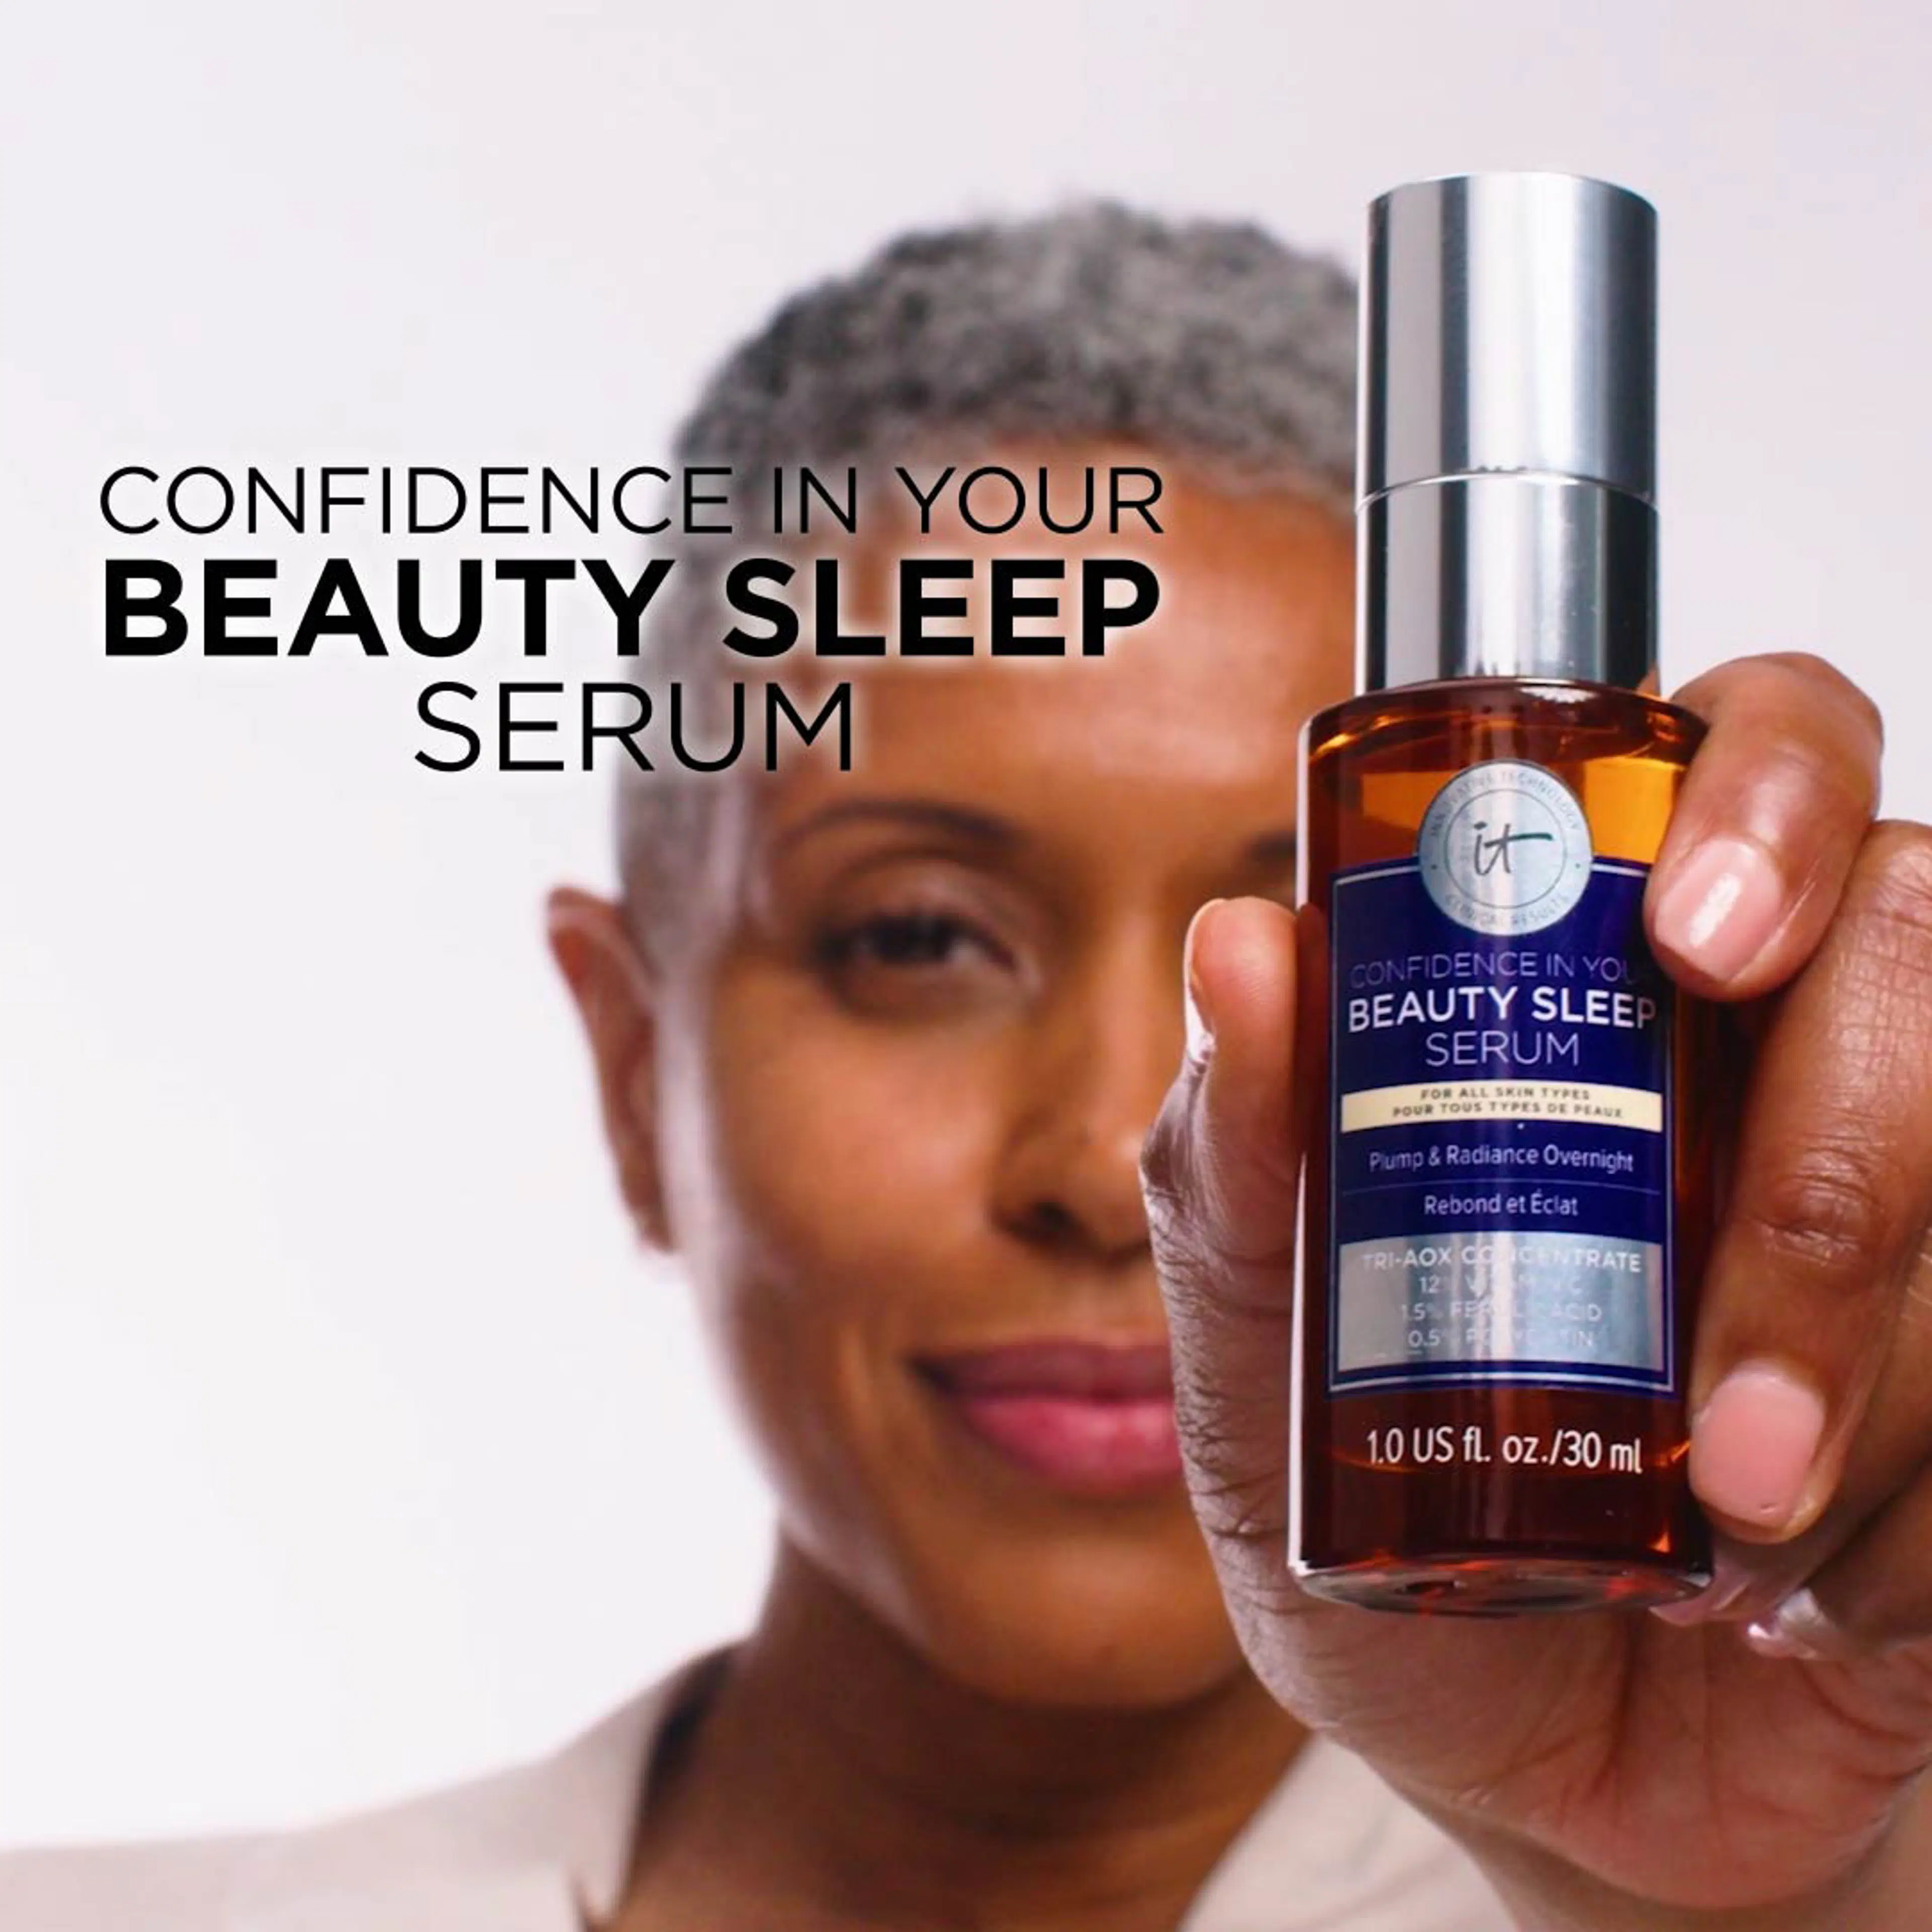 IT Cosmetics Confidence in Your Beauty Sleep and Glow Seerumi 30 ml